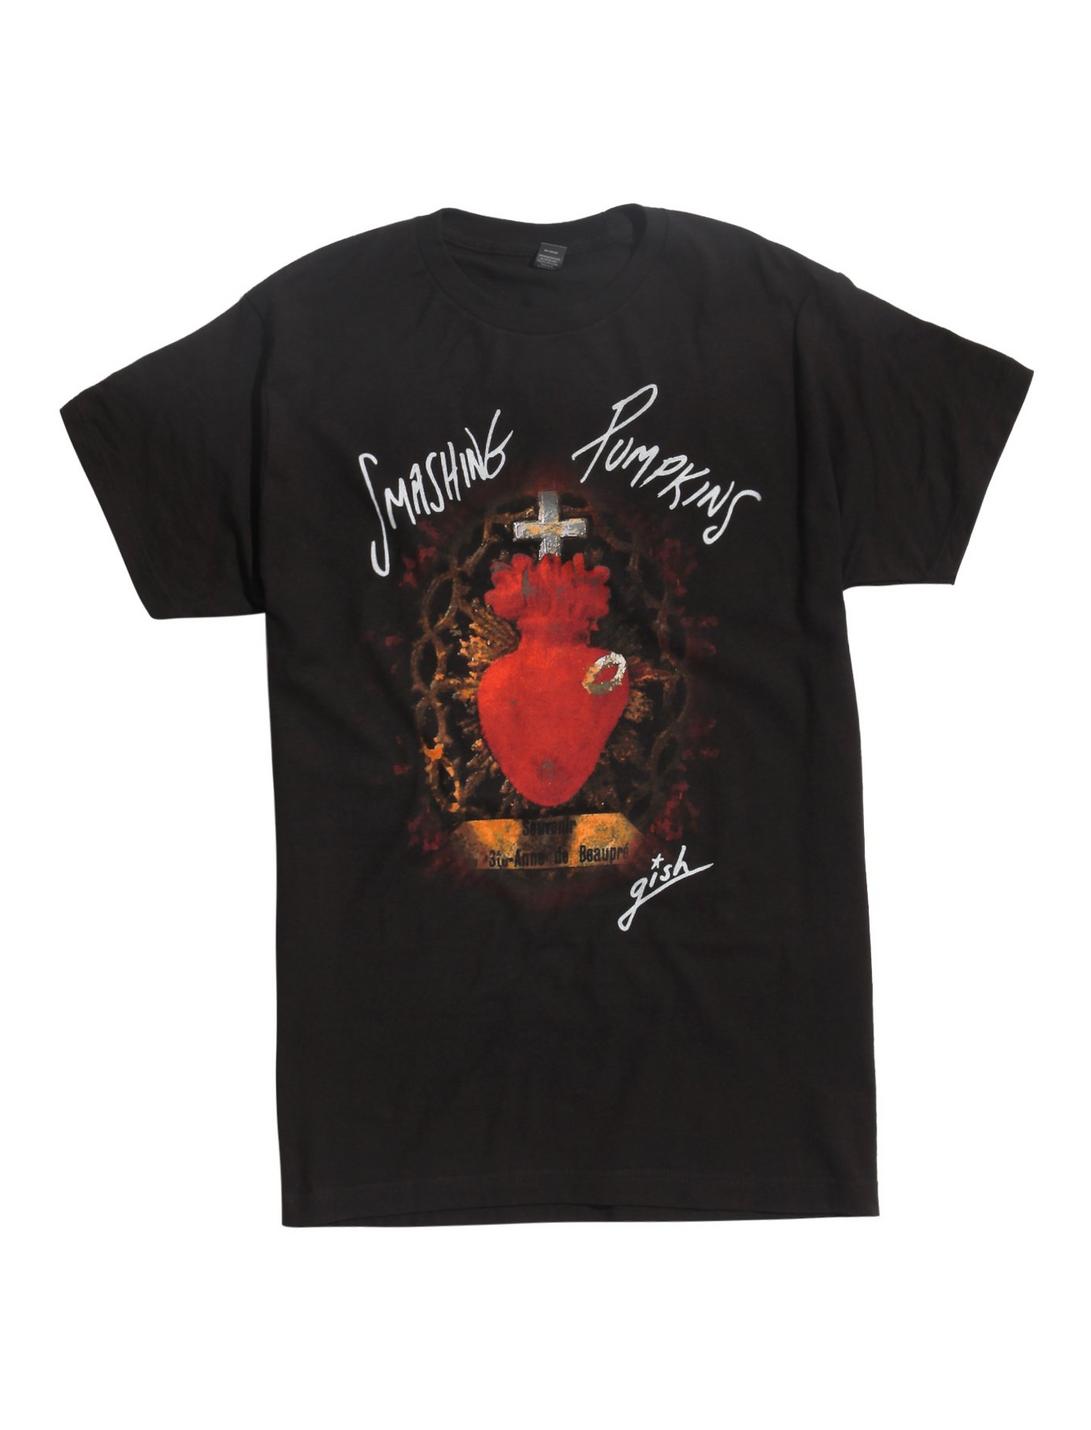 Smashing Pumpkins Gish Heart T-Shirt, BLACK, hi-res